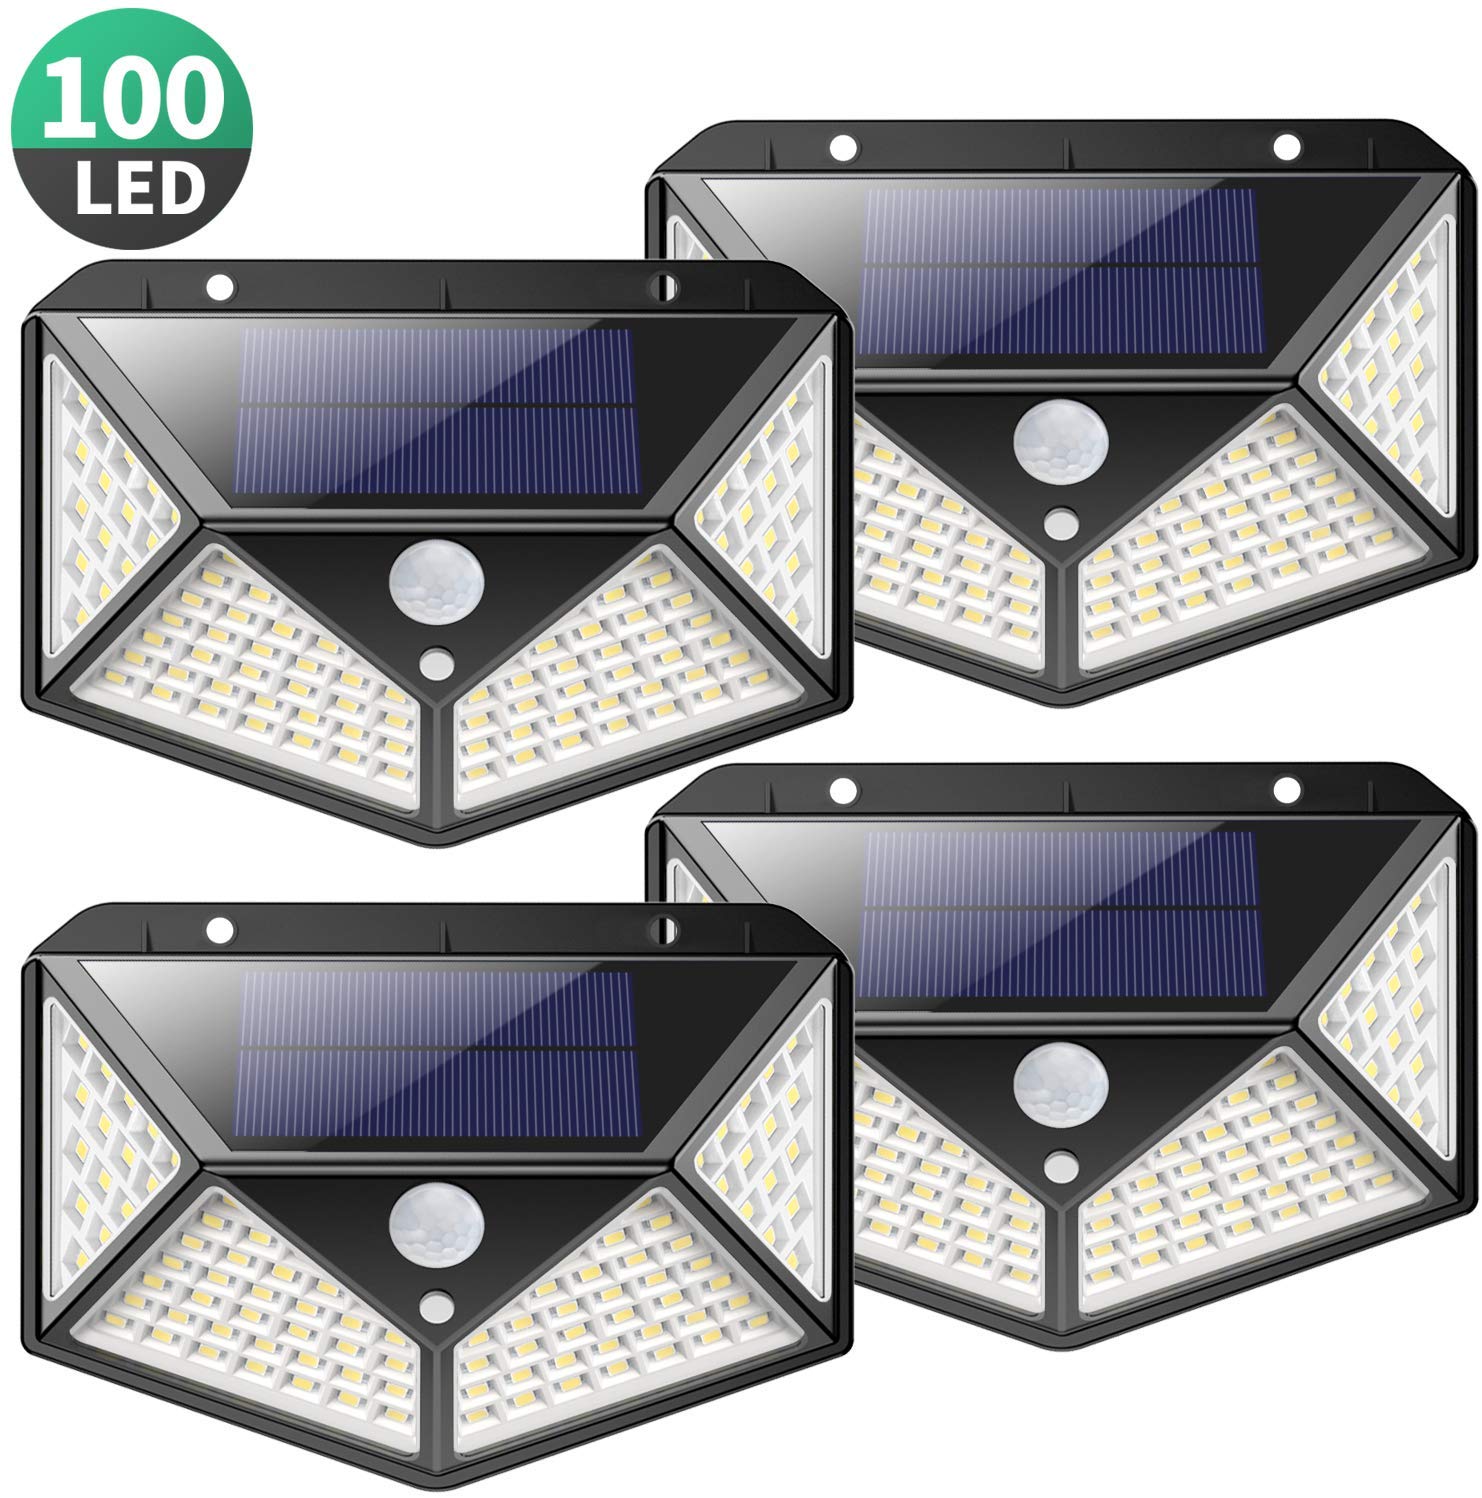 100 LED Solar Power Wandleuchte Bewegungsmelder Wasserdichte Gartenlampe R6V7 